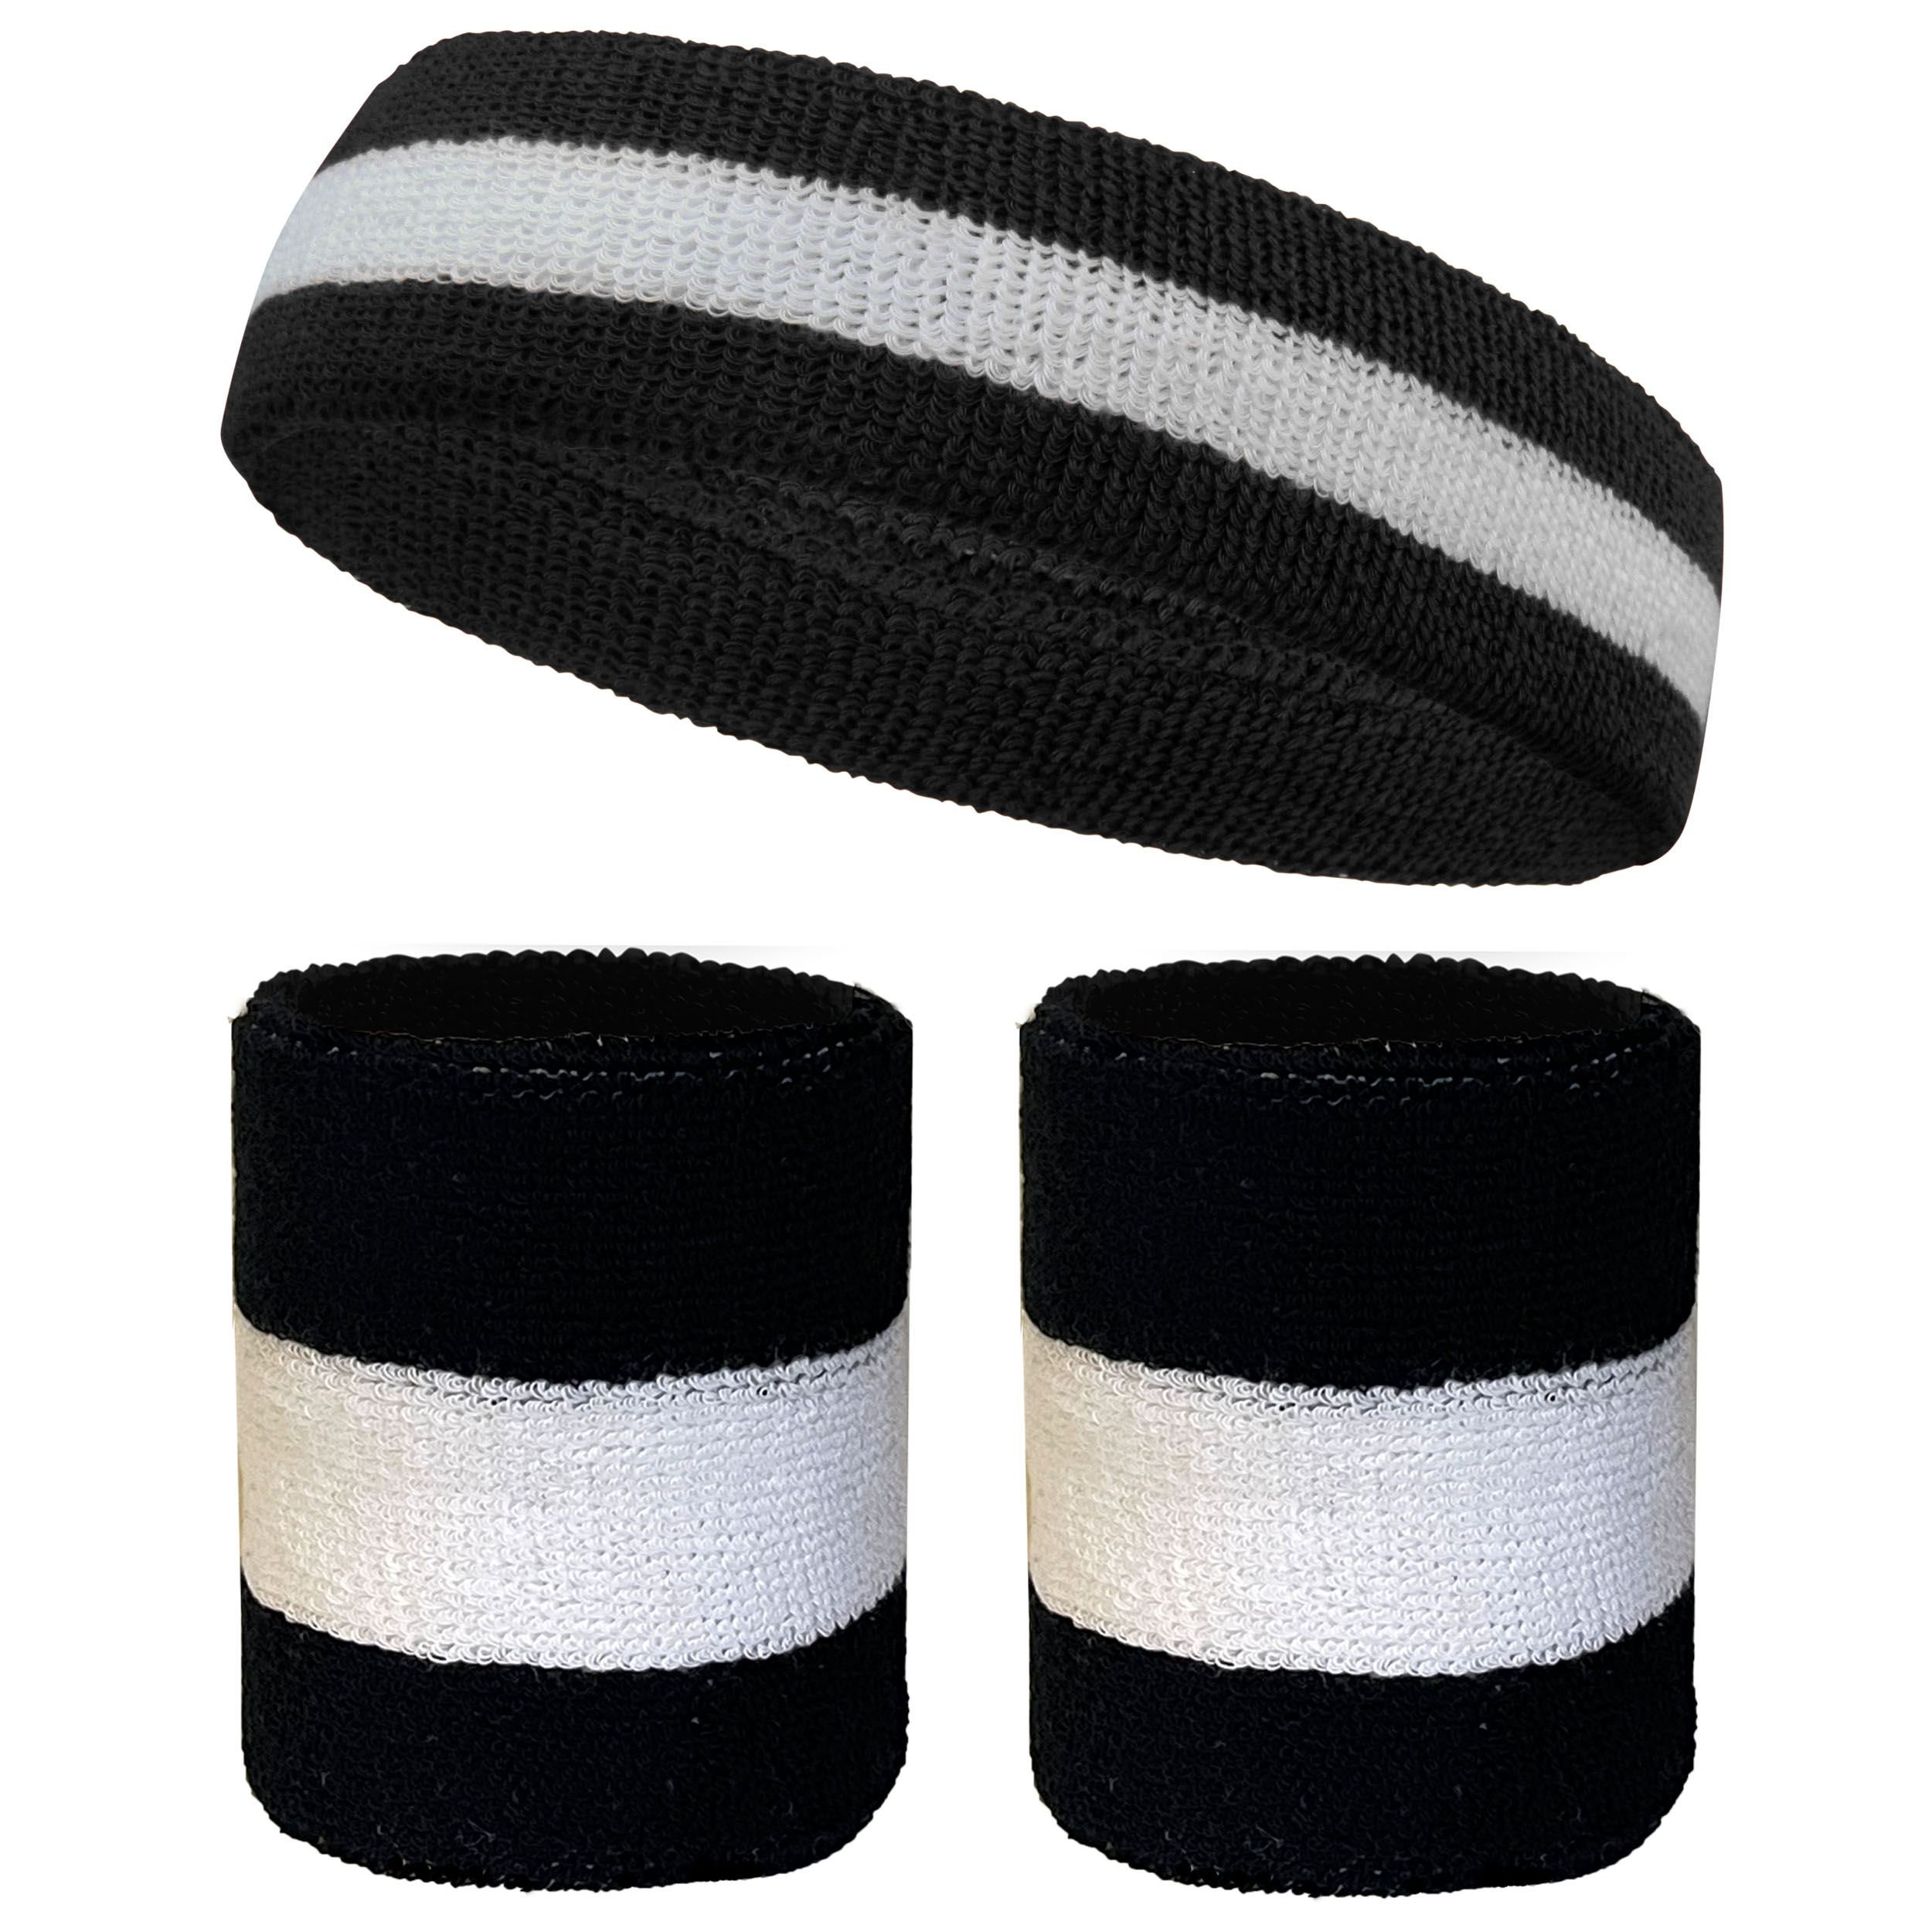 White with Black Striped Quality Headband & Wristbands Set